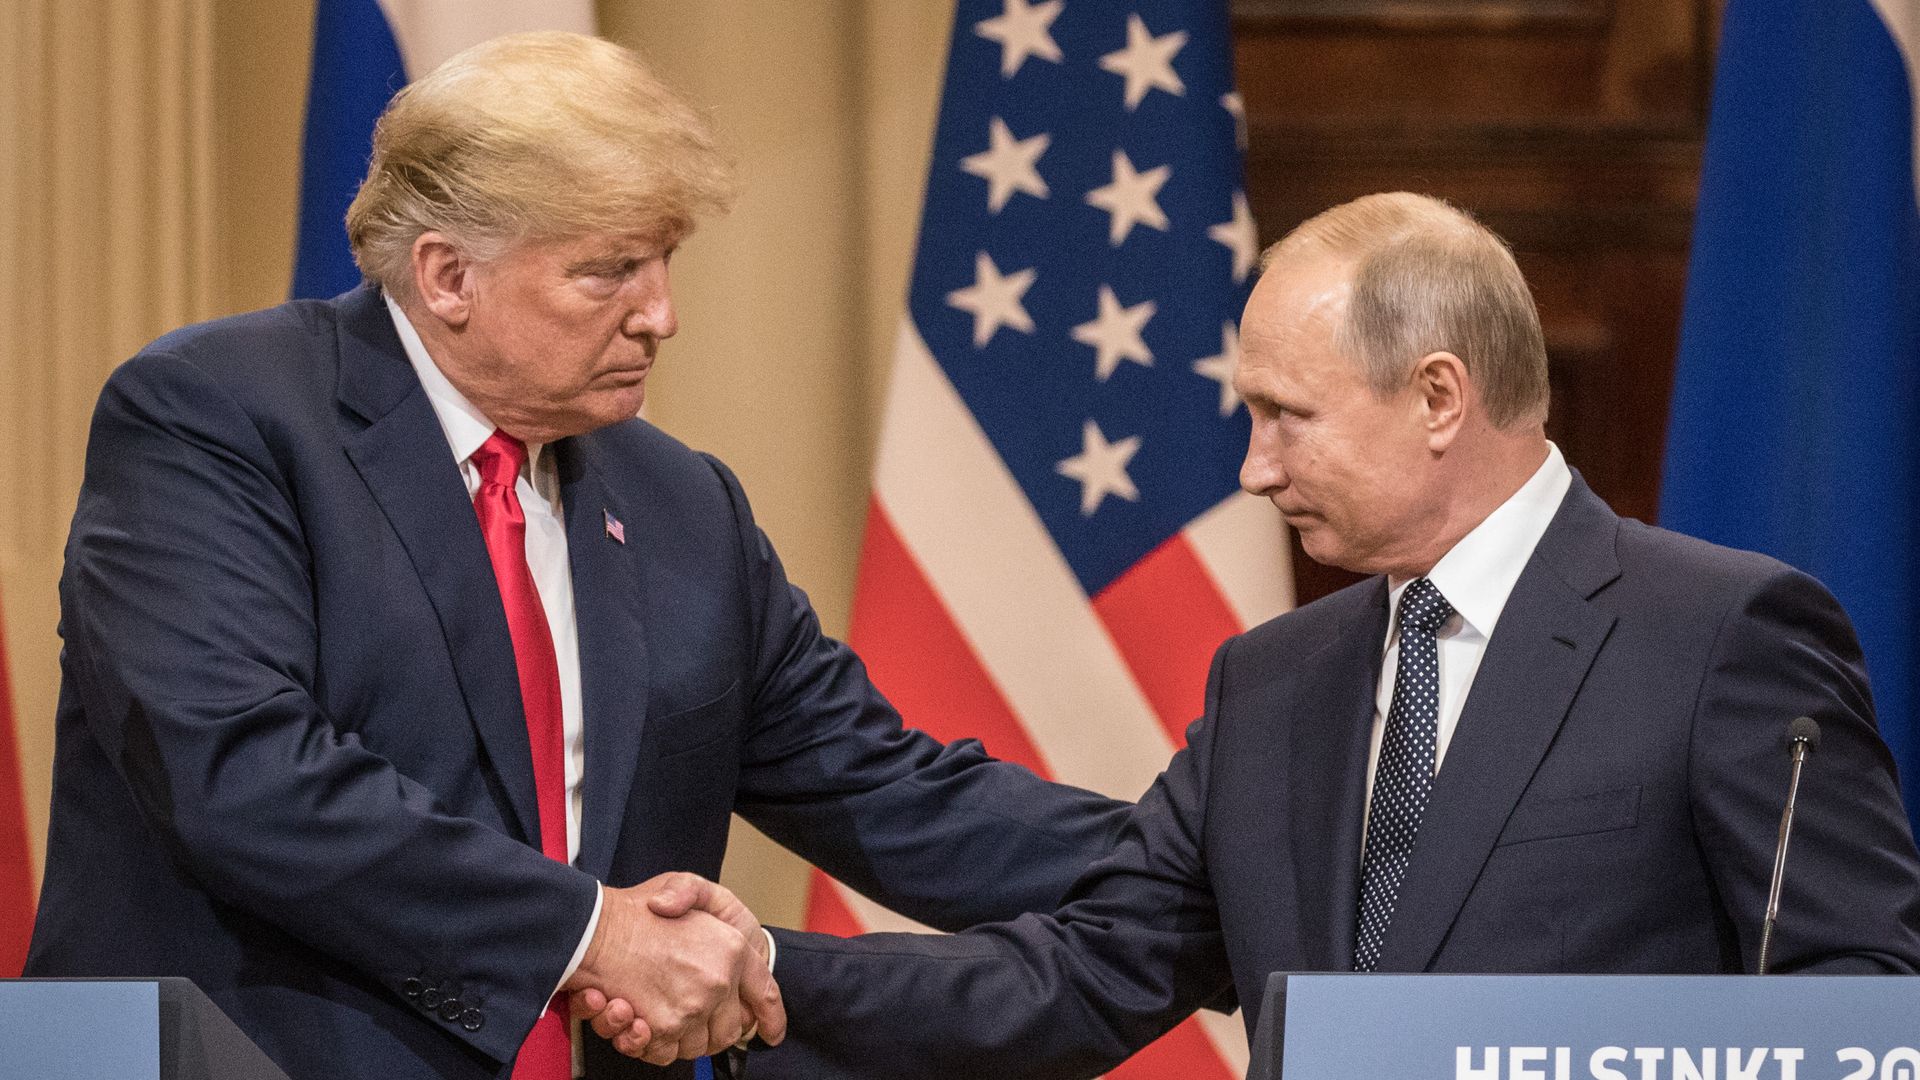 Putin shaking hands with Trump in Helsinki